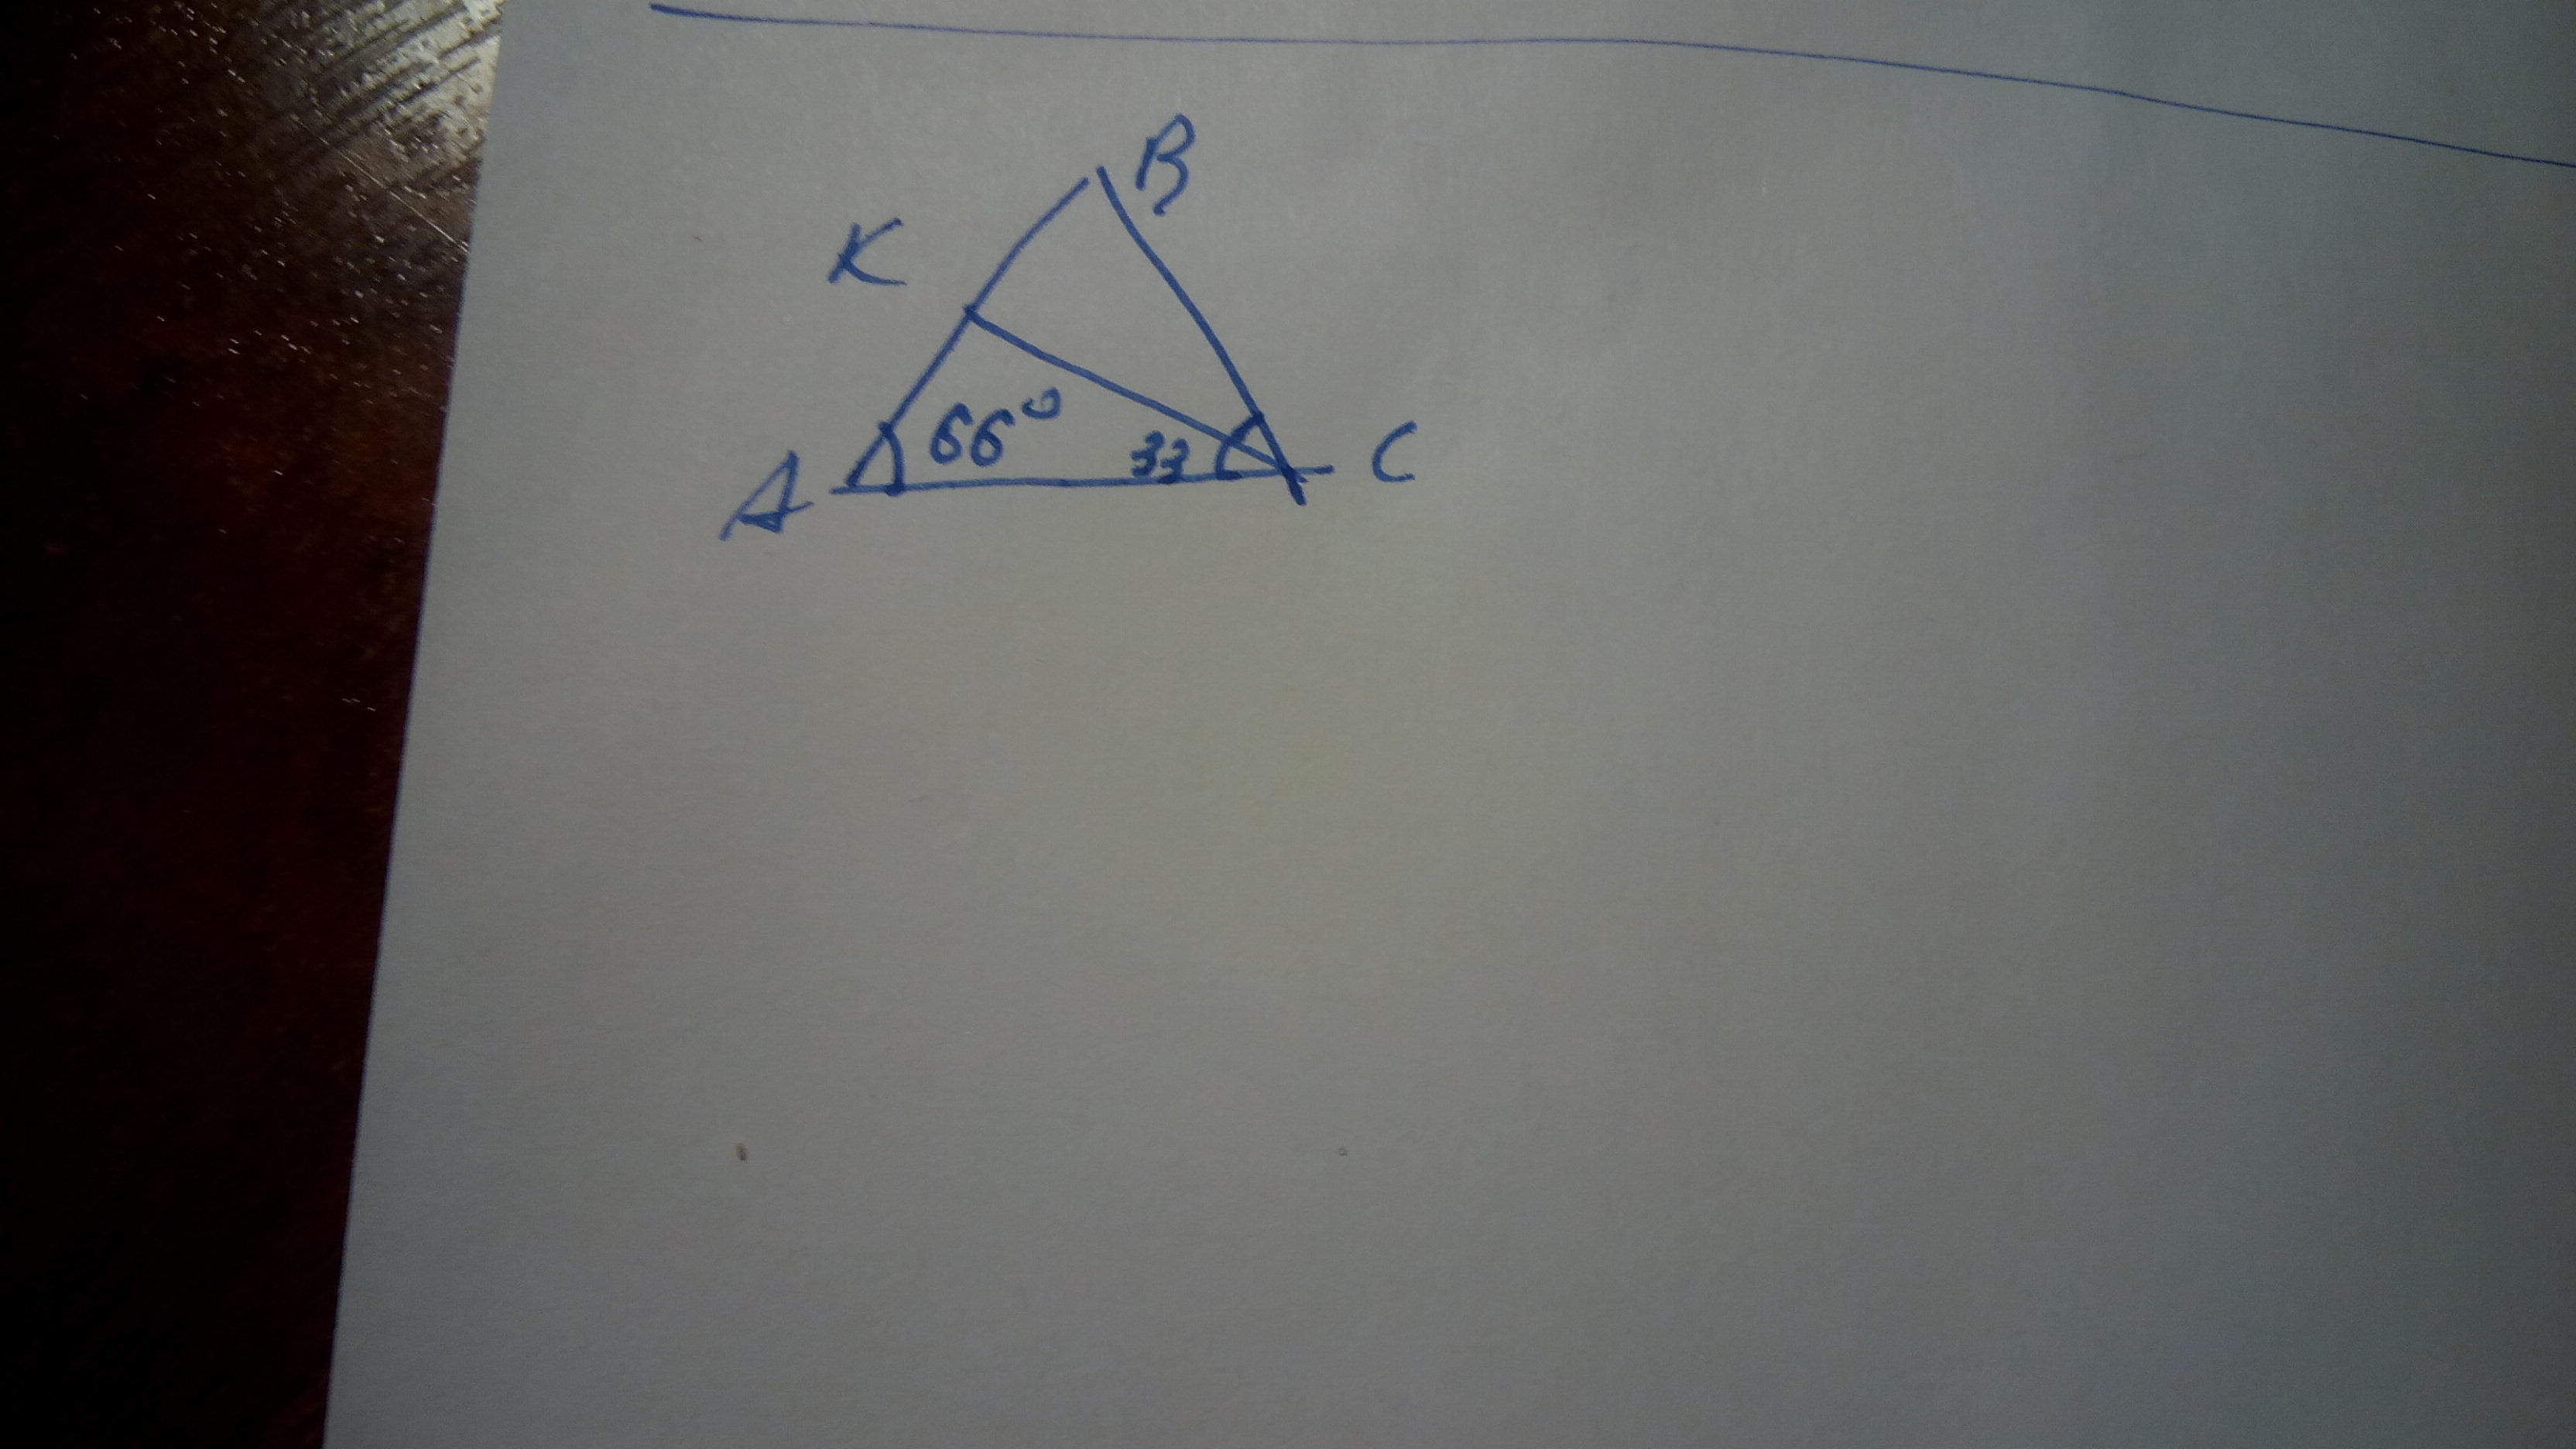 Дано аб равно бц. Найдите на треугольнике углы АБЦ. В треугольнике ABC угол a равен 40 градусов а биссектриса CF.